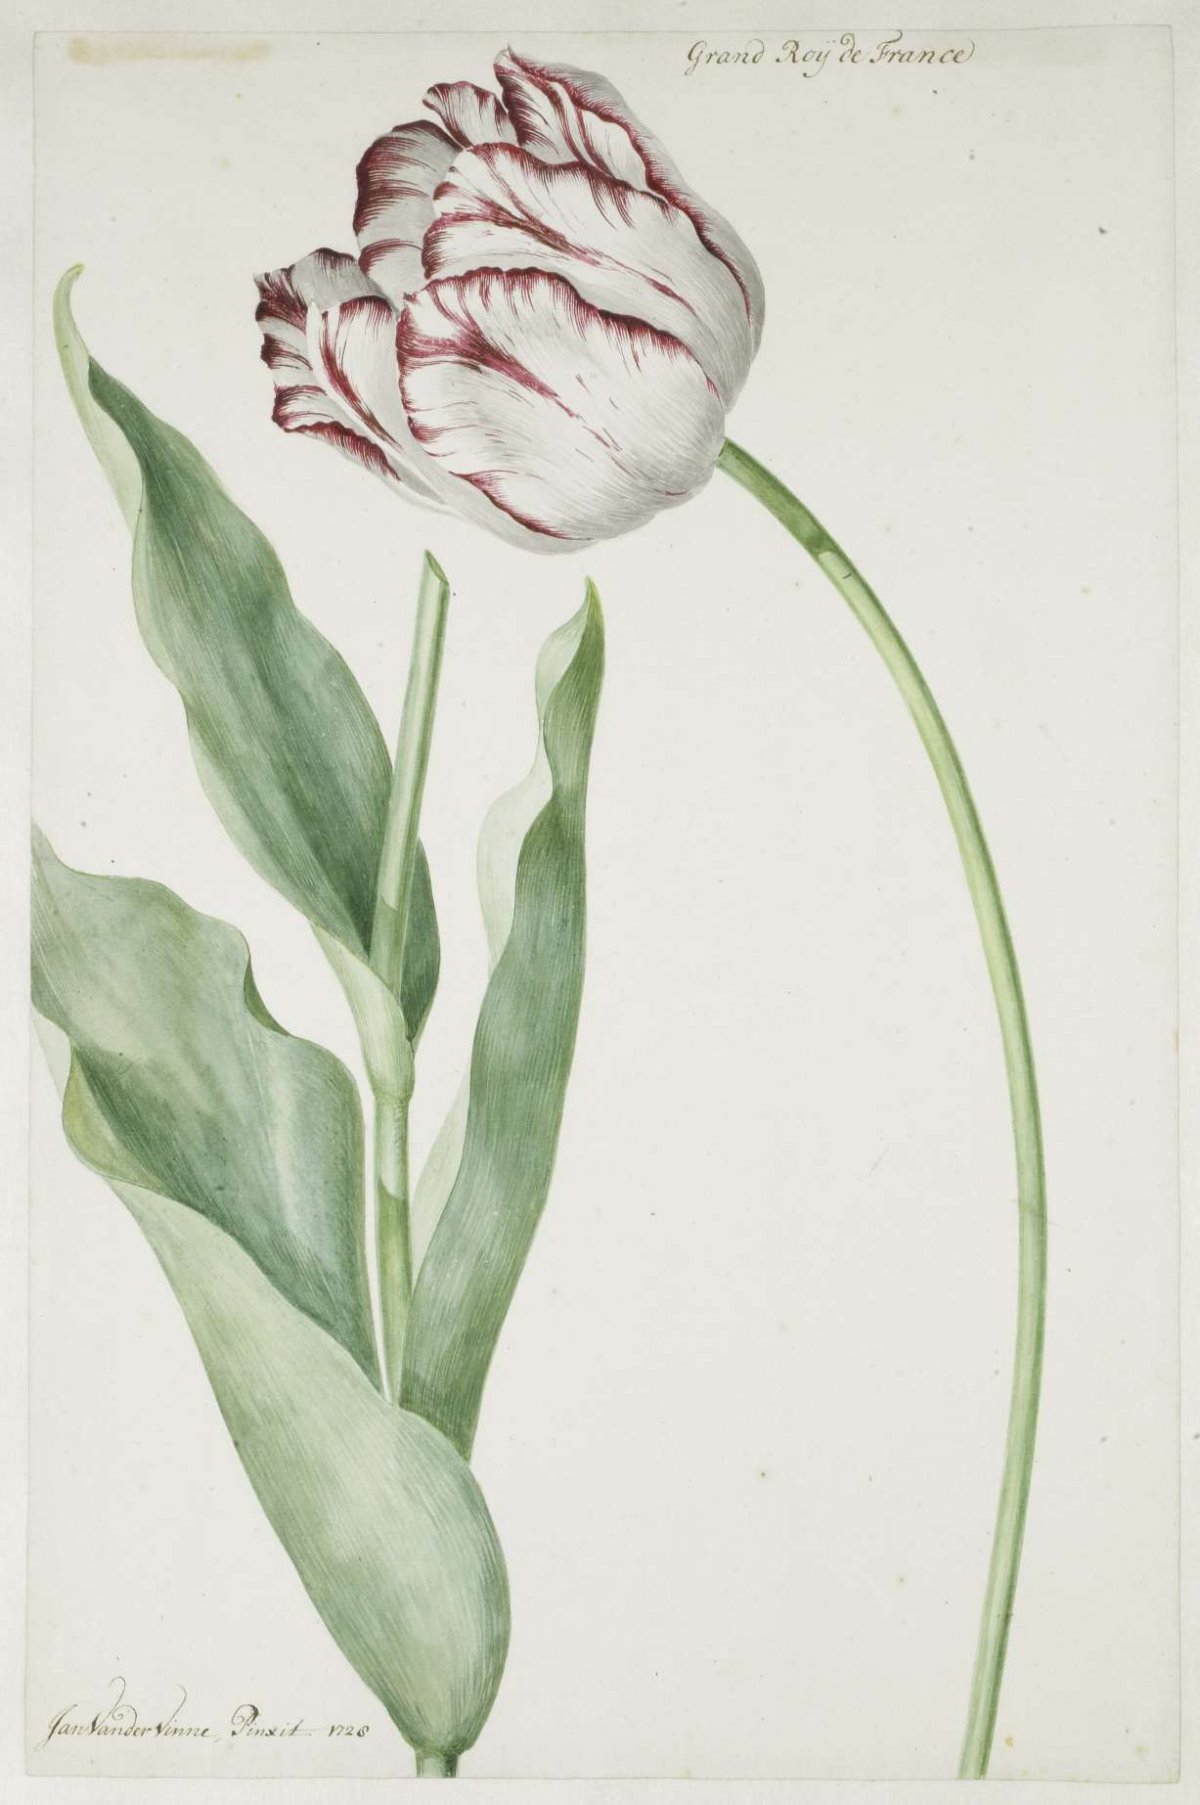 Tulip Grand Roy de France, Jan Laurensz. van der Vinne, 1728